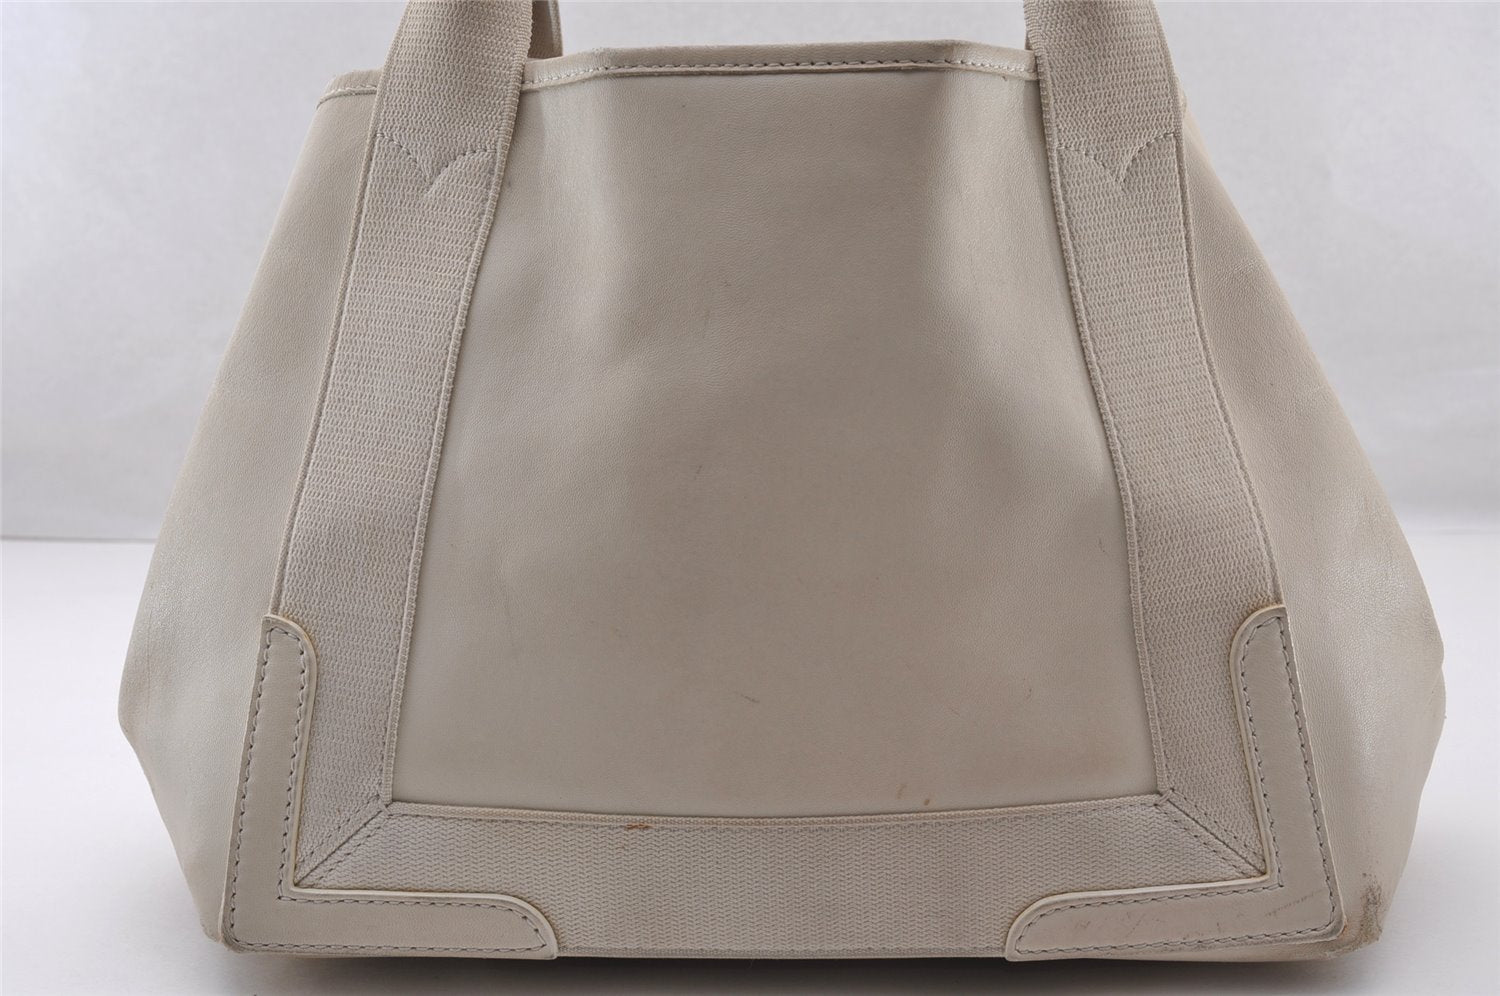 Authentic BALENCIAGA Navy Caba S Hand Bag Purse Leather 339933 White 4638I